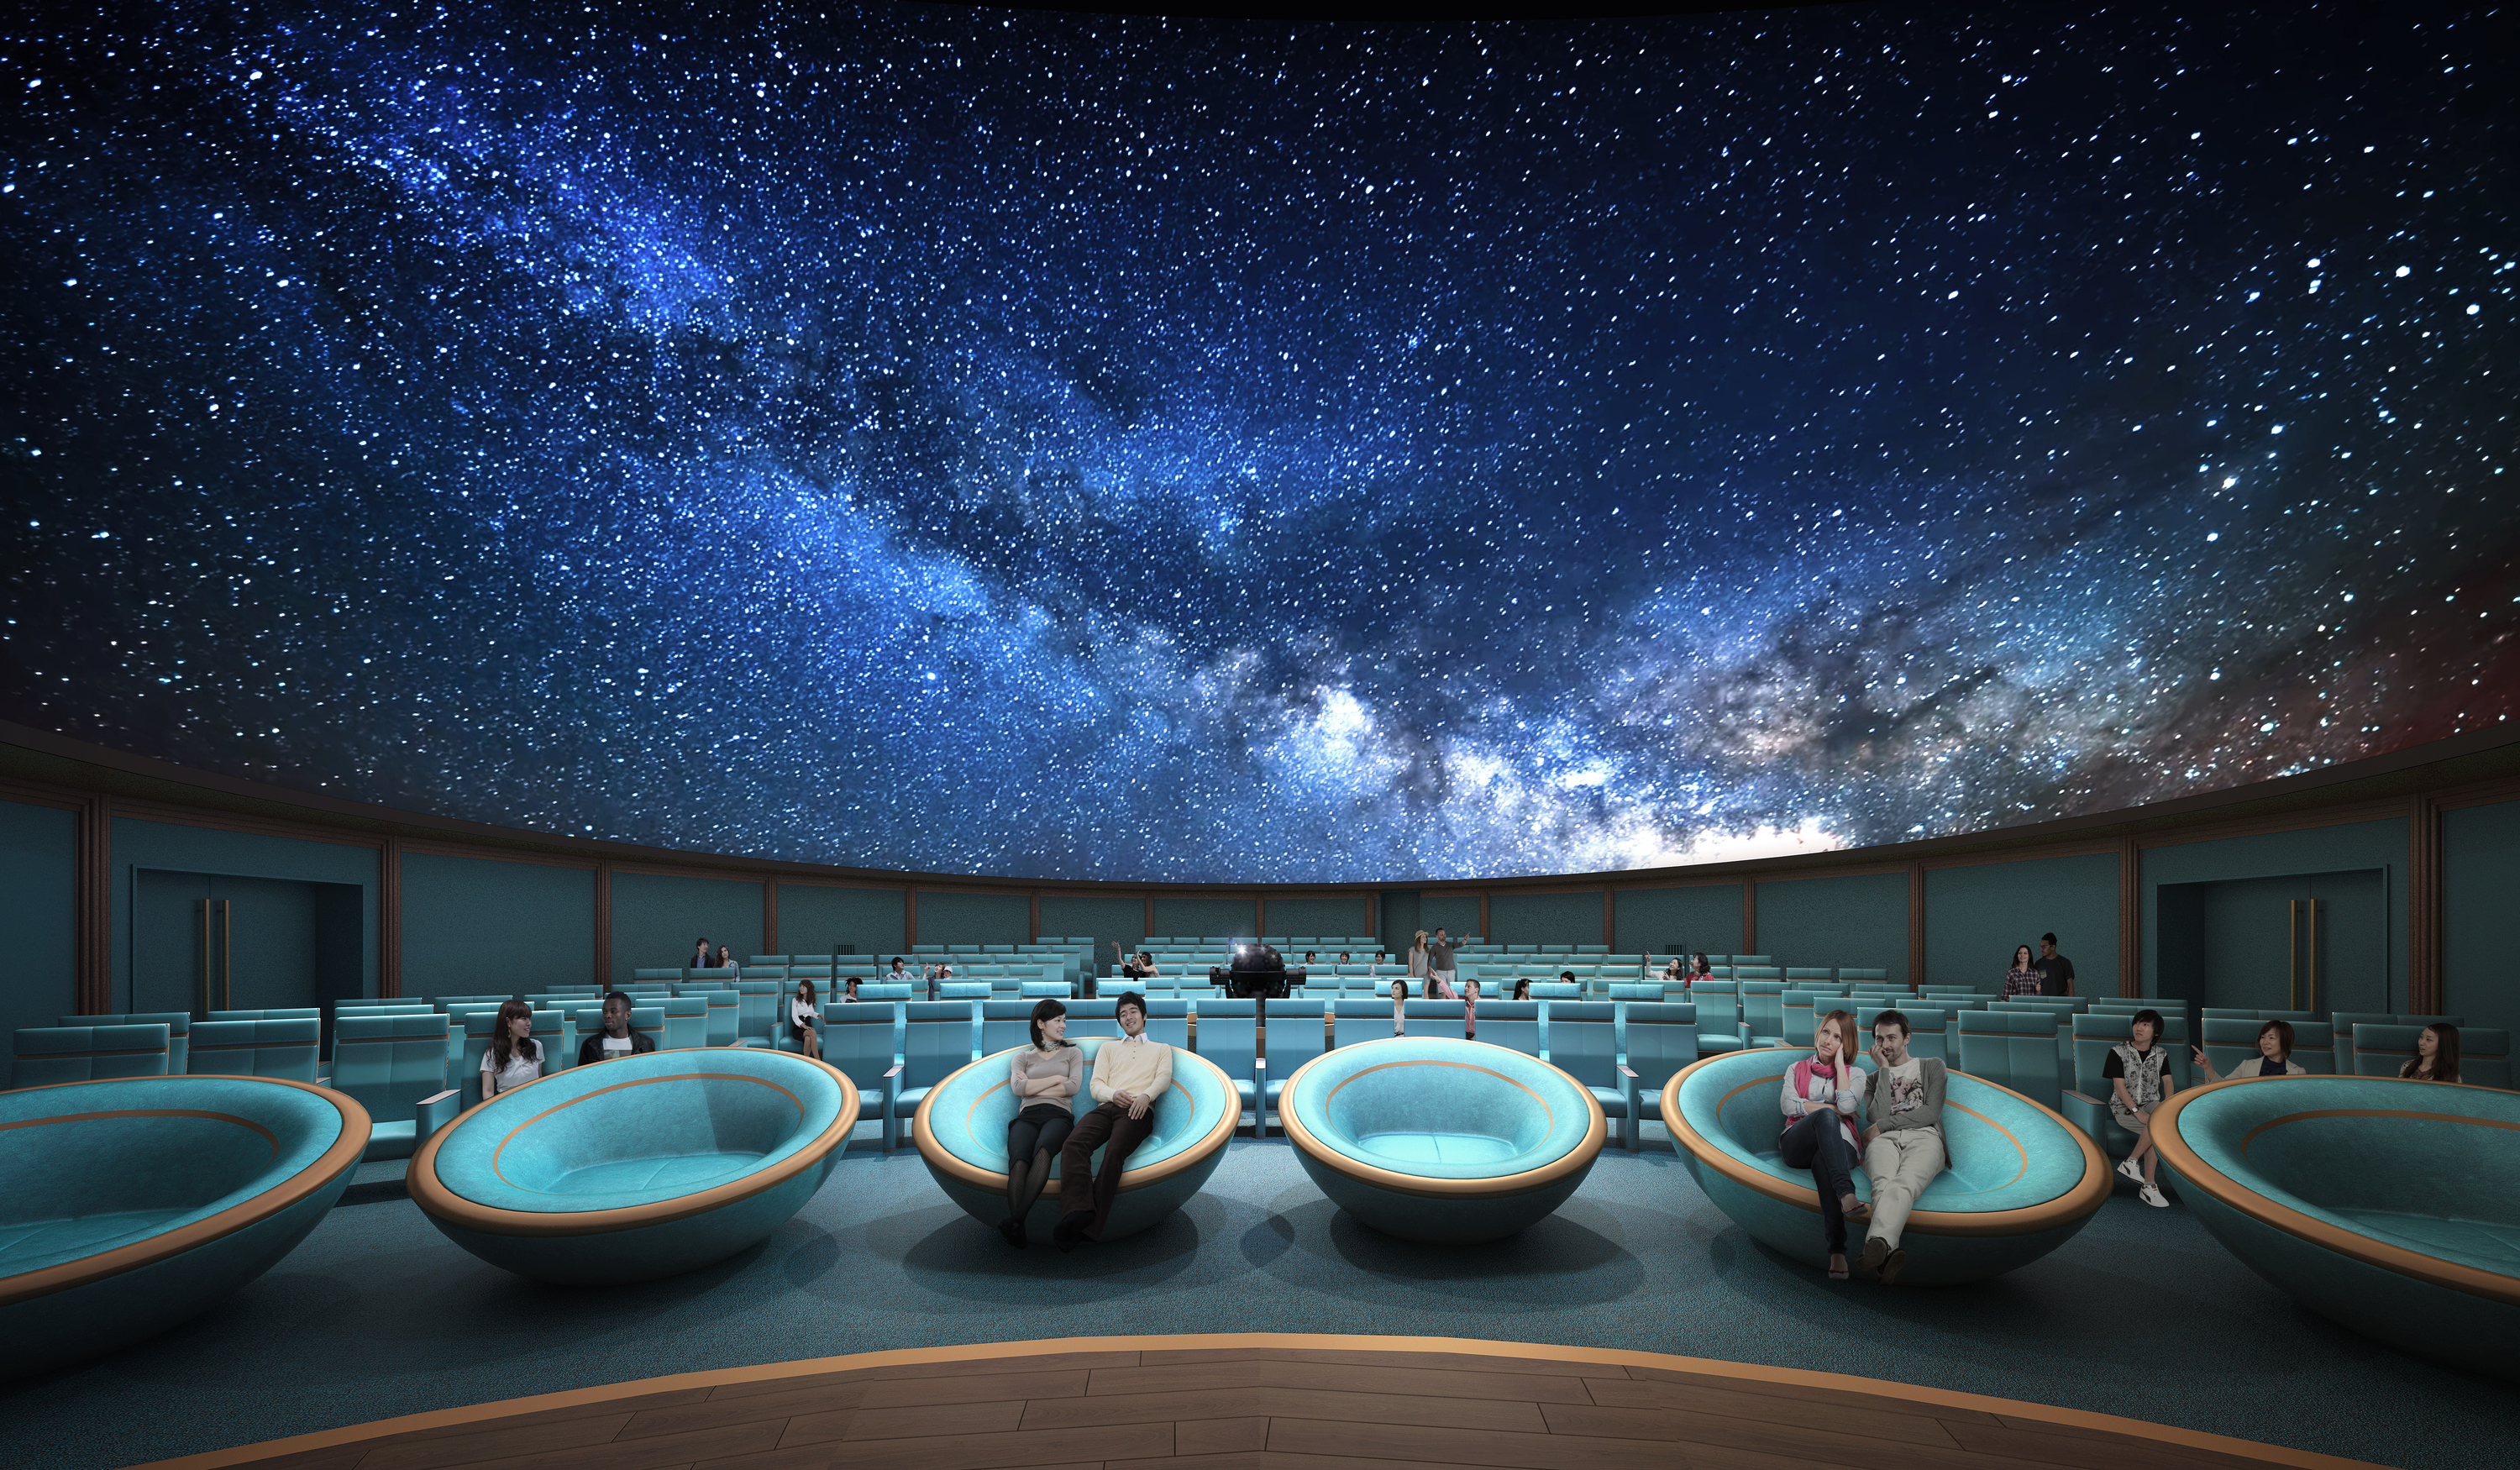 Konica Minolta Planetaria Tokyo celebra su primer aniversario